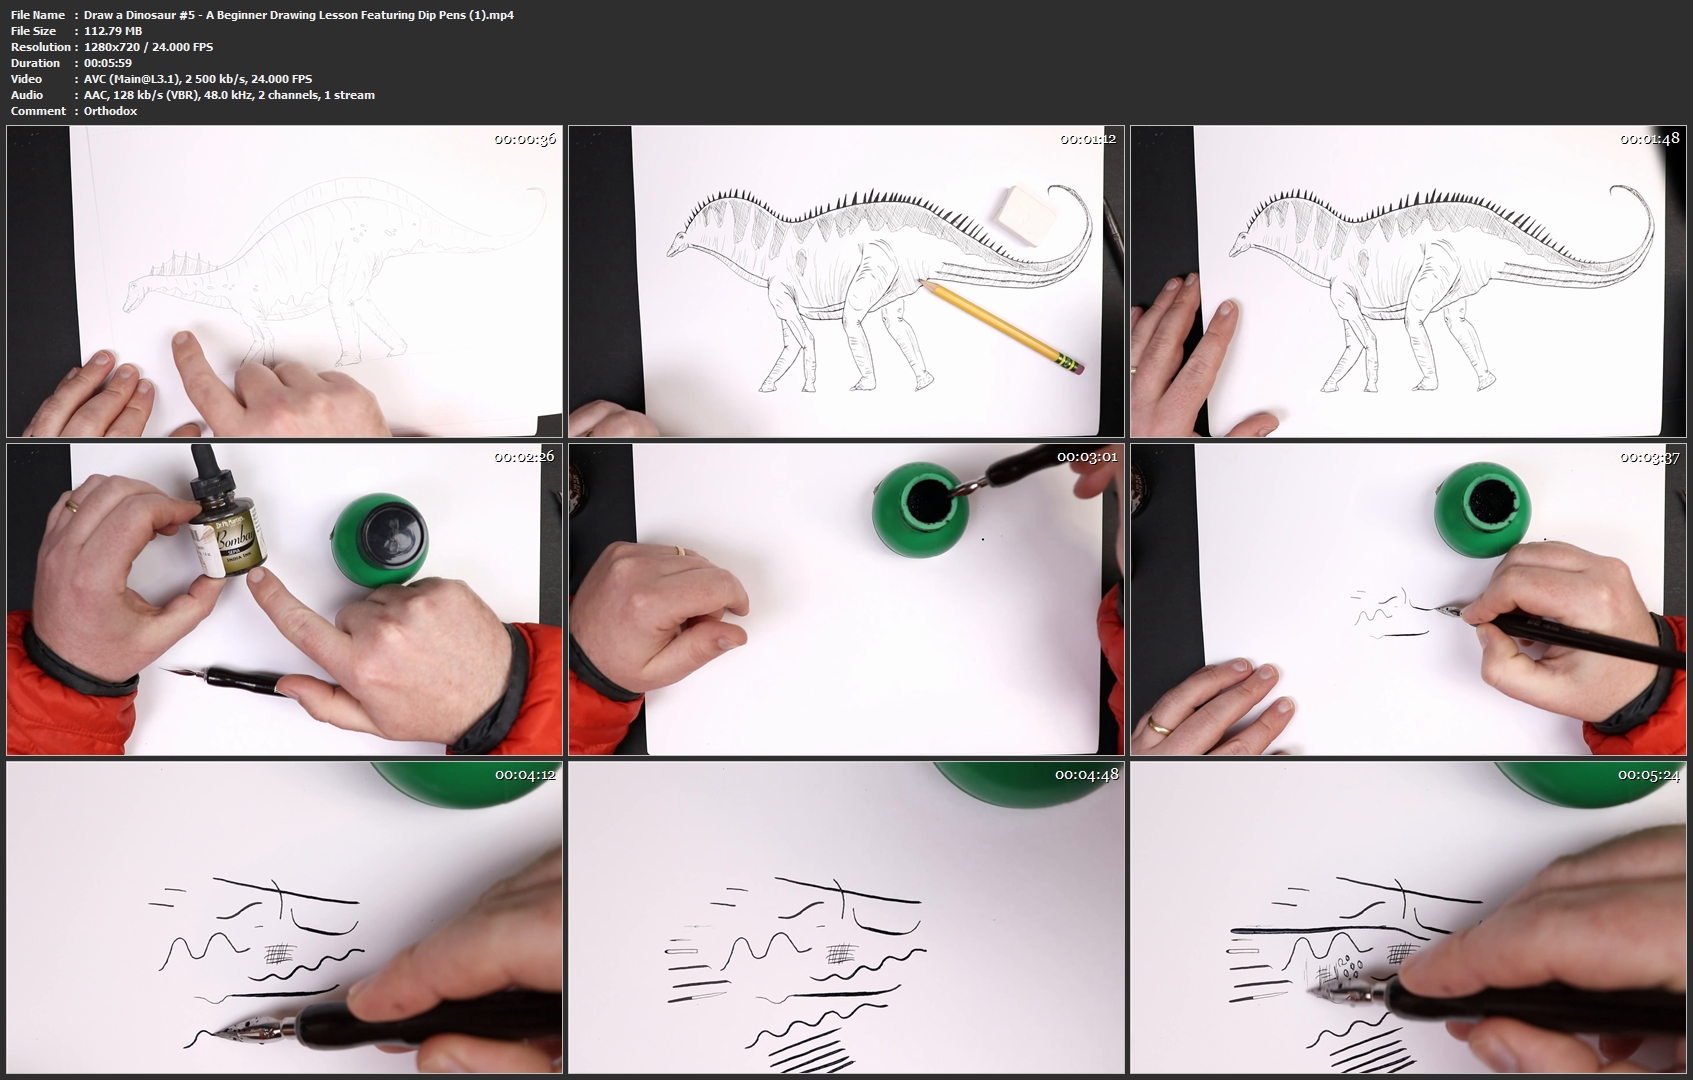 Draw-a-Dinosaur-5-A-Beginner-Drawing-Lesson-Featuring-Dip-Pen.jpg